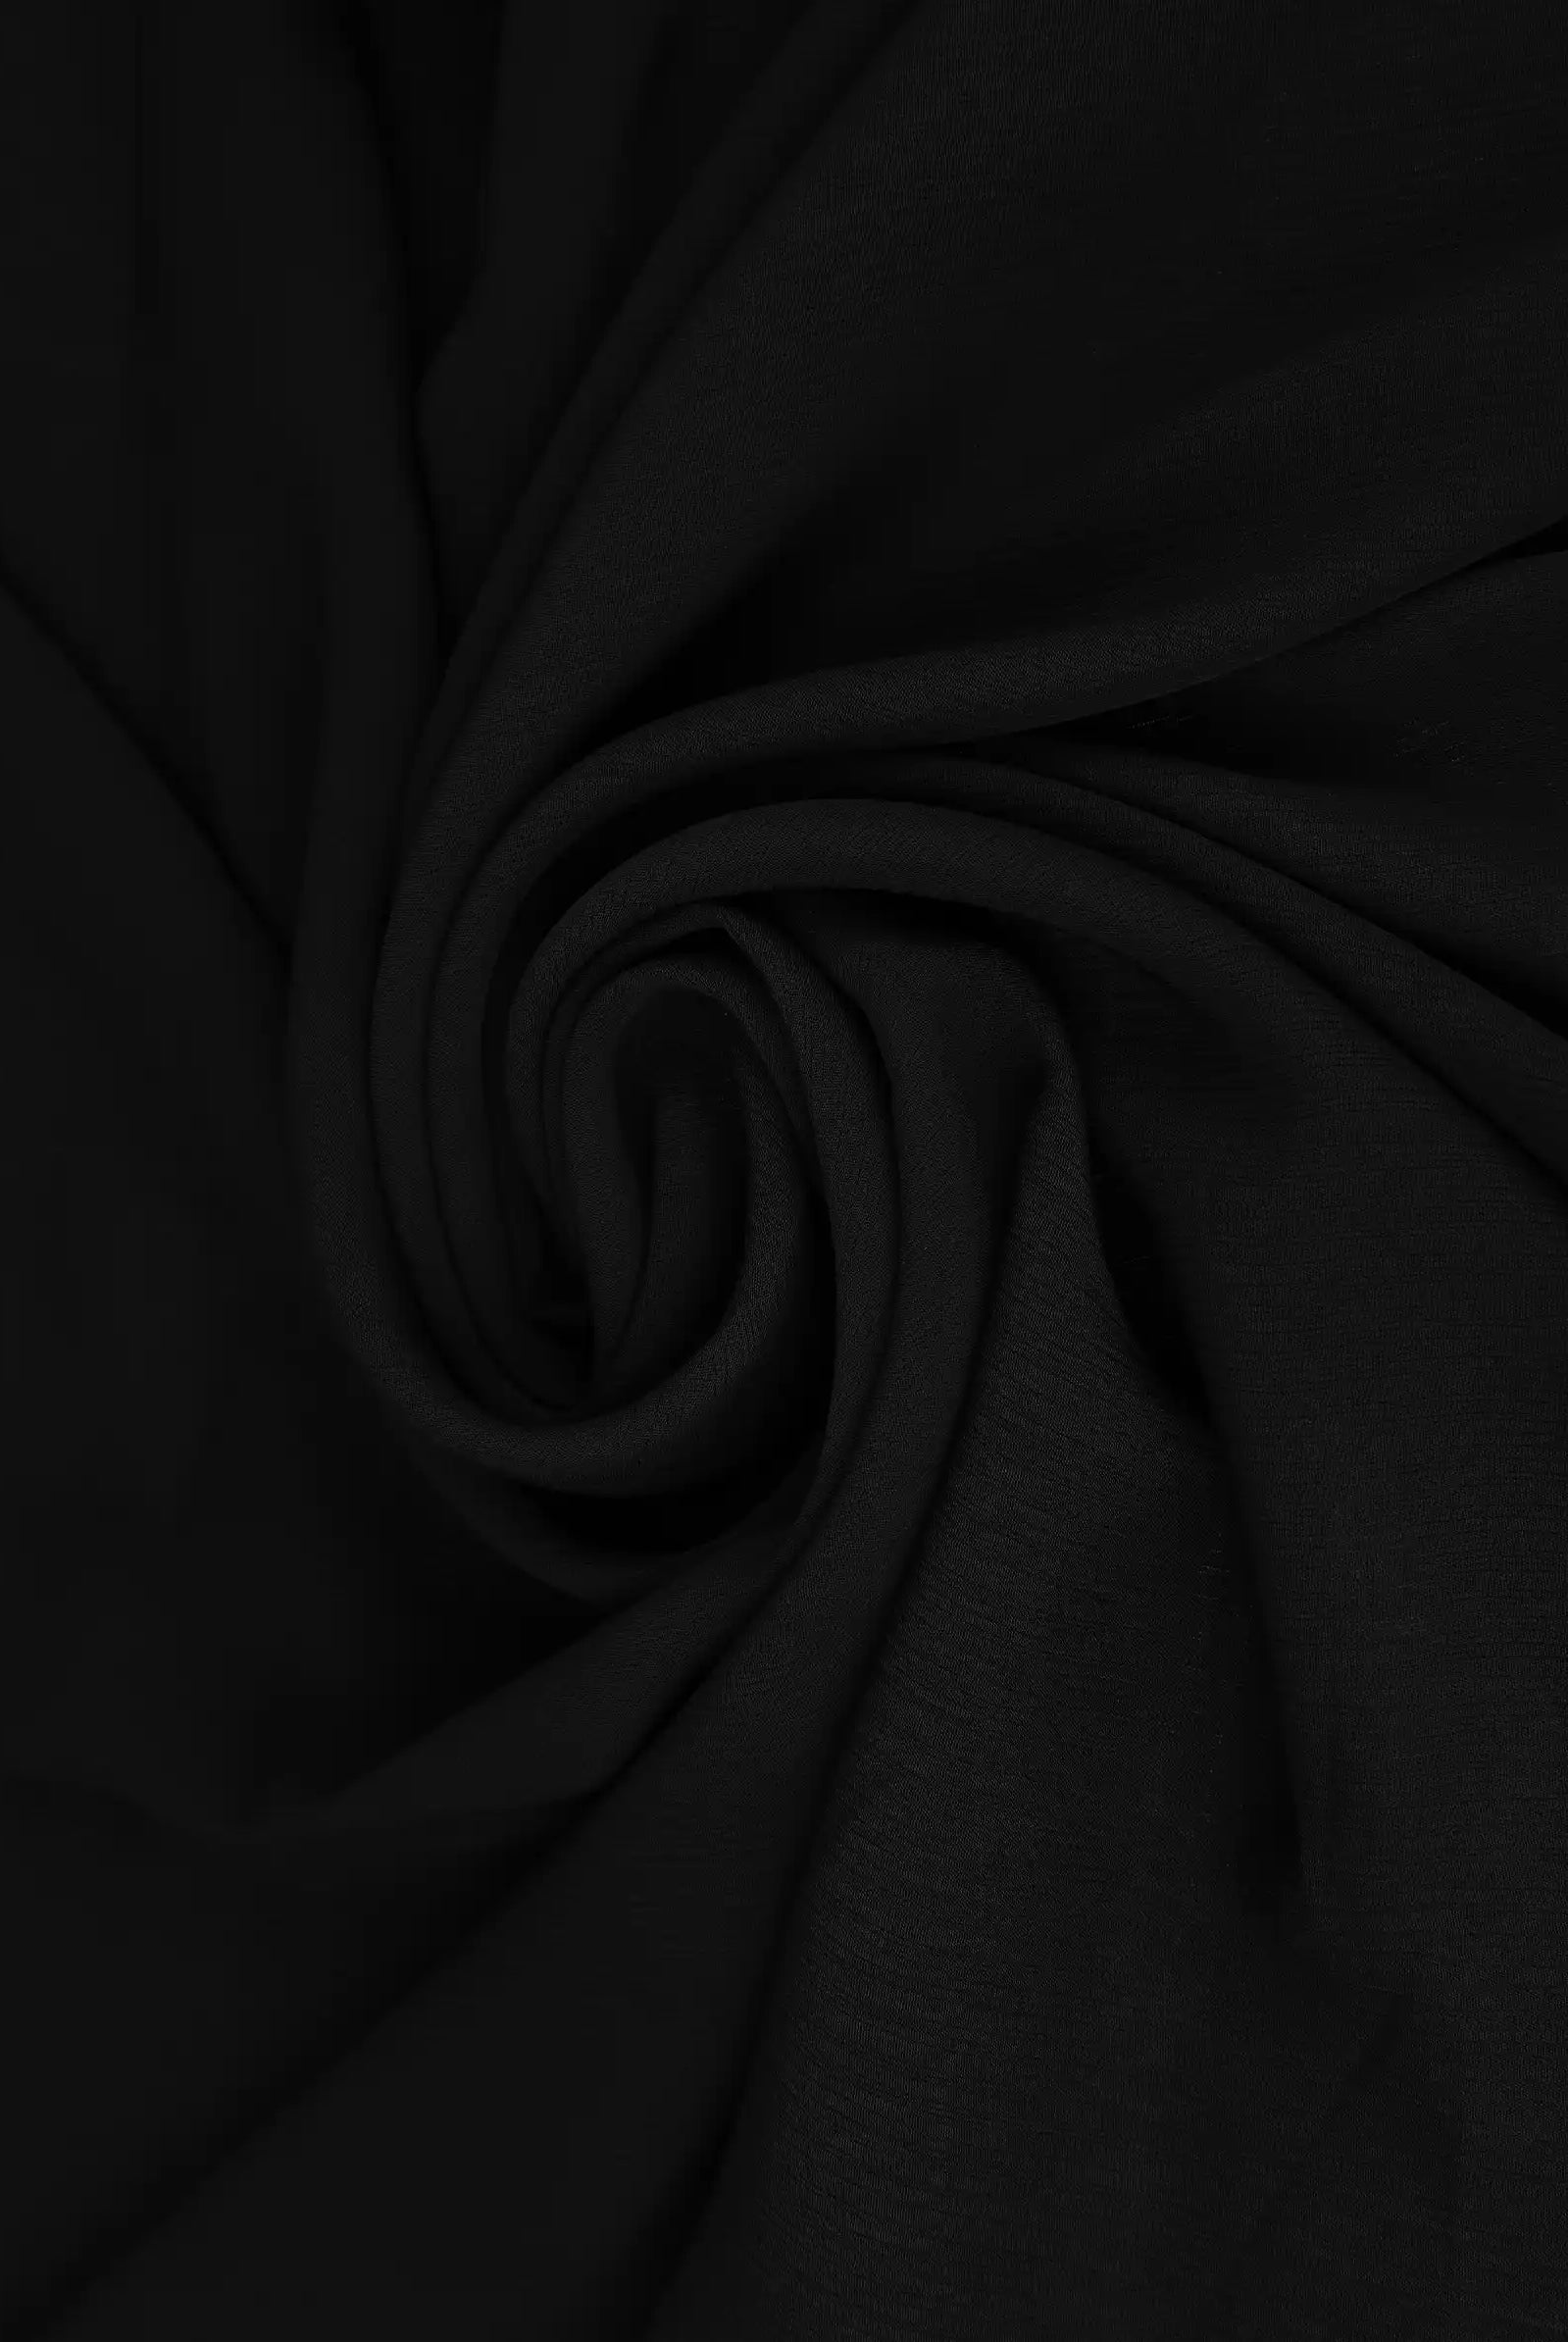 Long black chiffon scarf